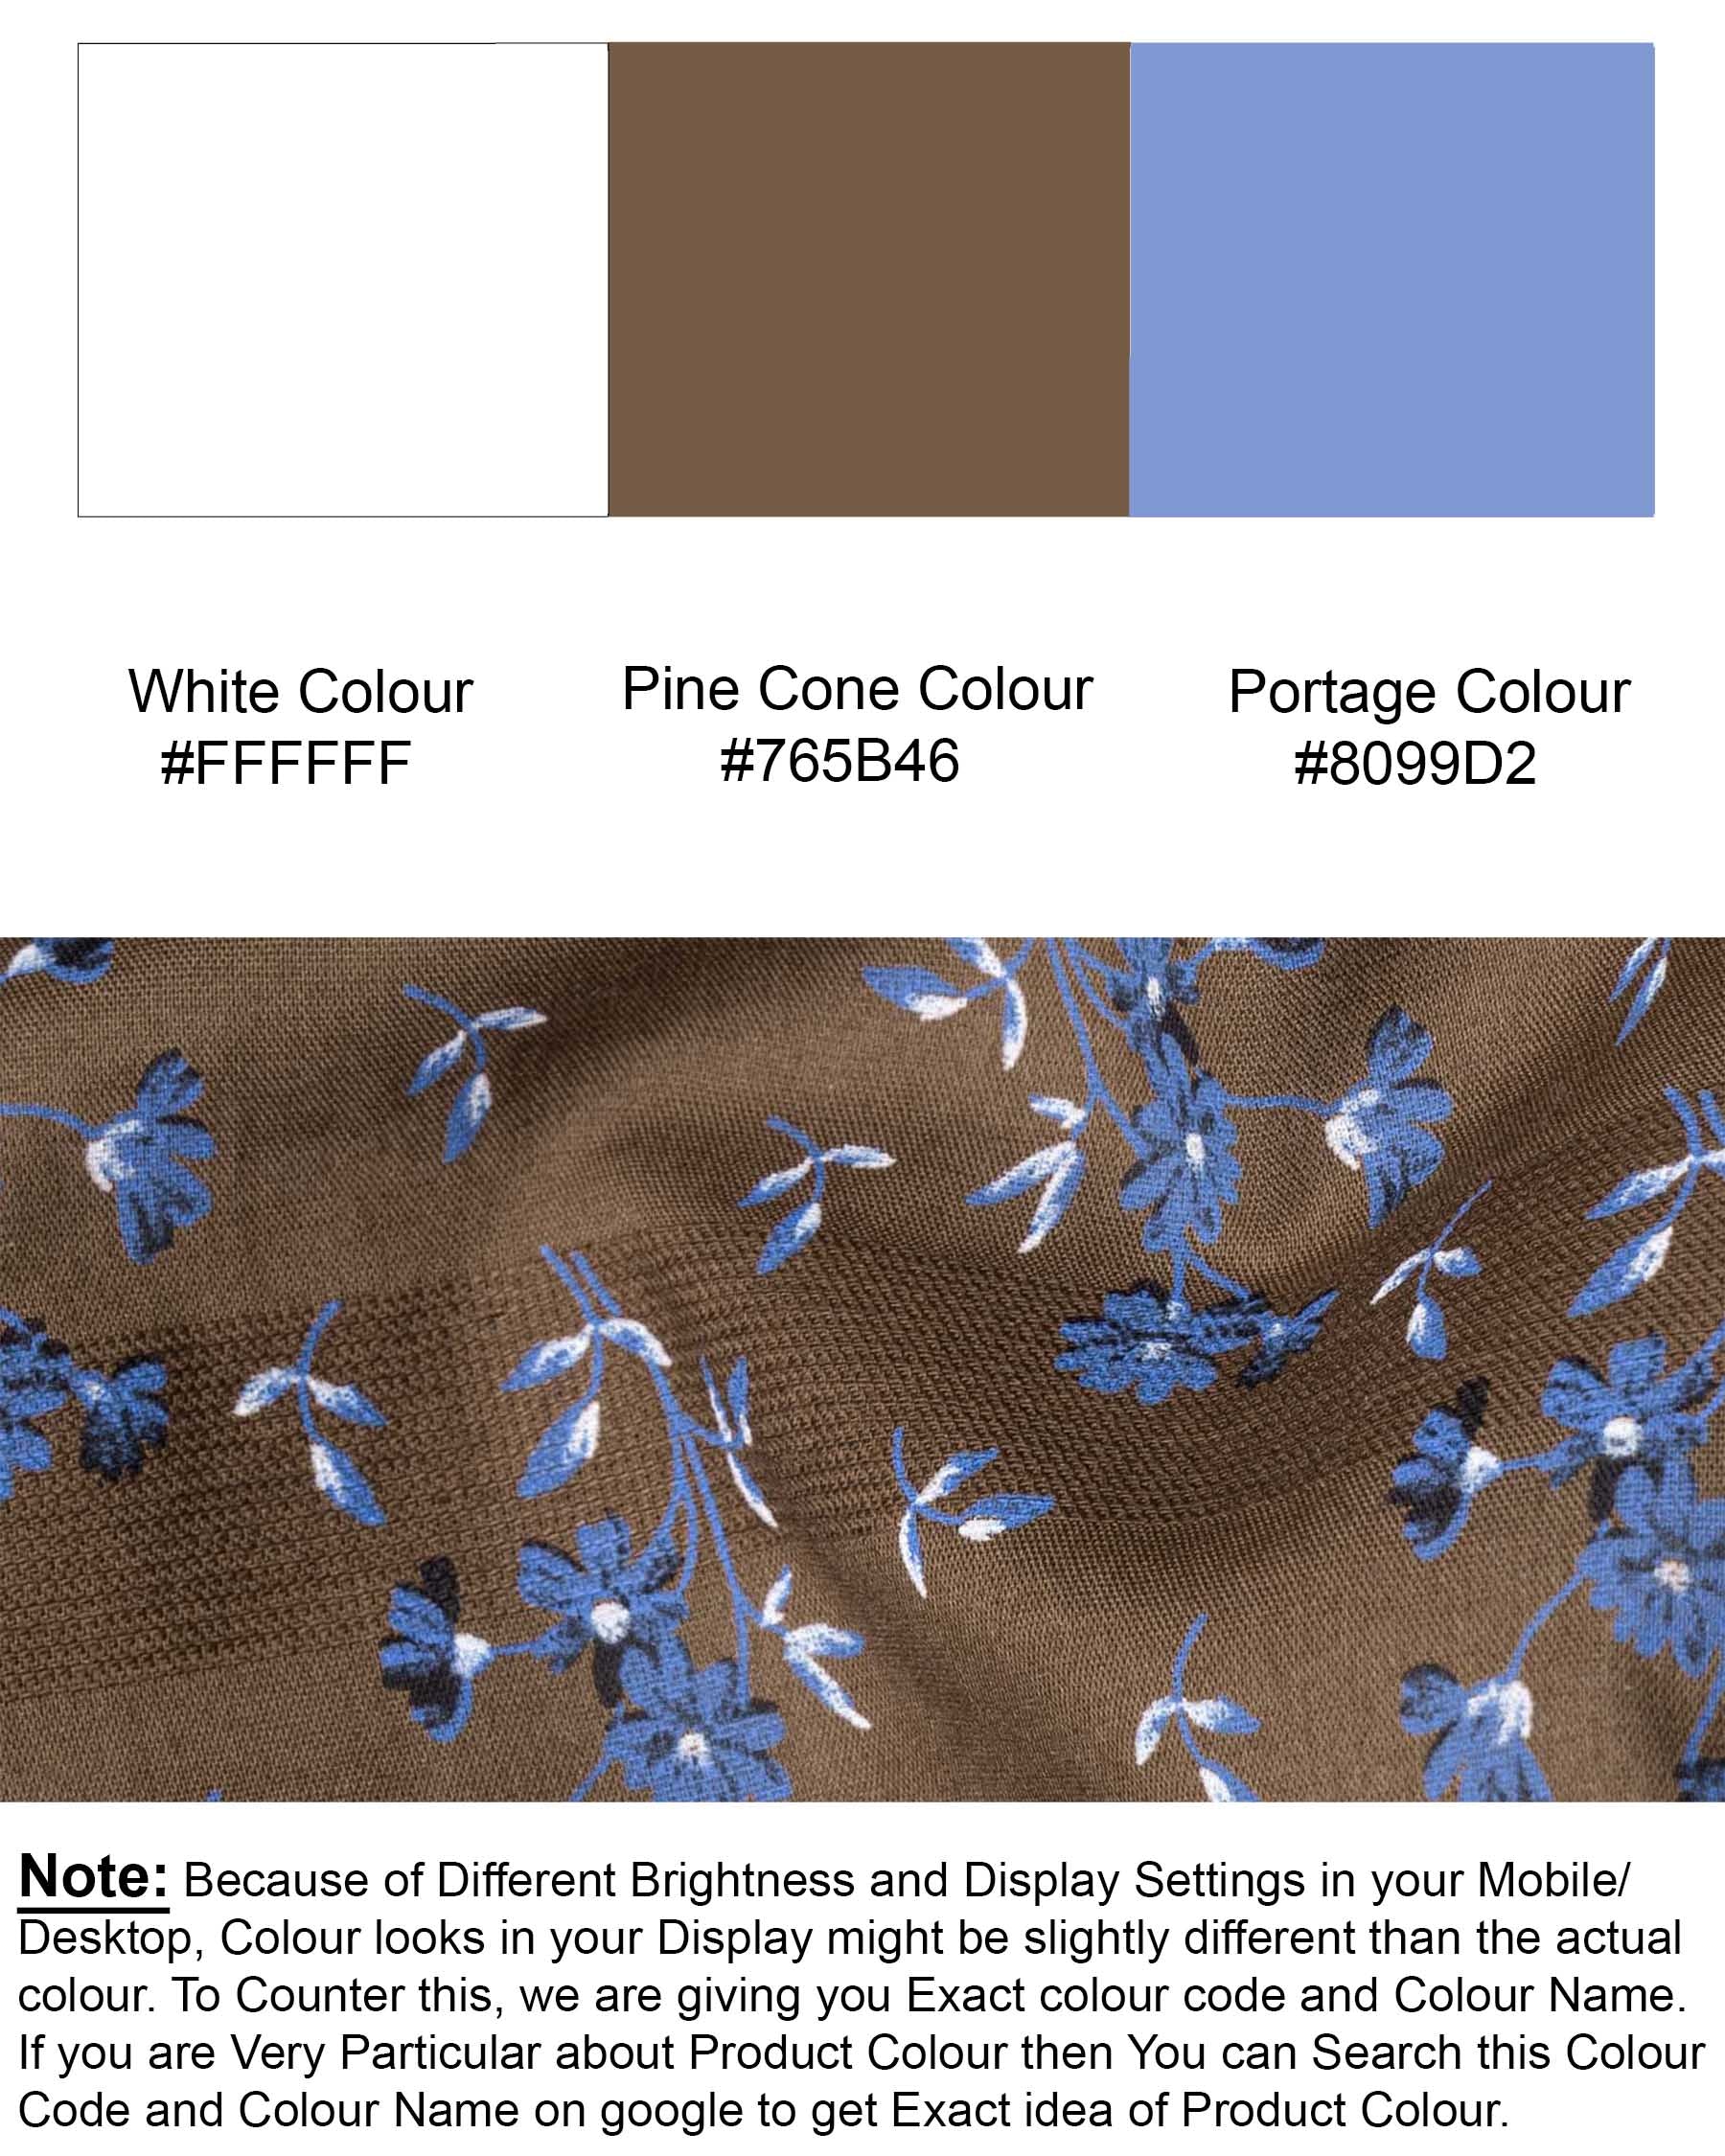 Pine Cone Brown Floral Printed Dobby Premium Giza Cotton Shirt 6381-BLE-38,6381-BLE-H-38,6381-BLE-39,6381-BLE-H-39,6381-BLE-40,6381-BLE-H-40,6381-BLE-42,6381-BLE-H-42,6381-BLE-44,6381-BLE-H-44,6381-BLE-46,6381-BLE-H-46,6381-BLE-48,6381-BLE-H-48,6381-BLE-50,6381-BLE-H-50,6381-BLE-52,6381-BLE-H-52